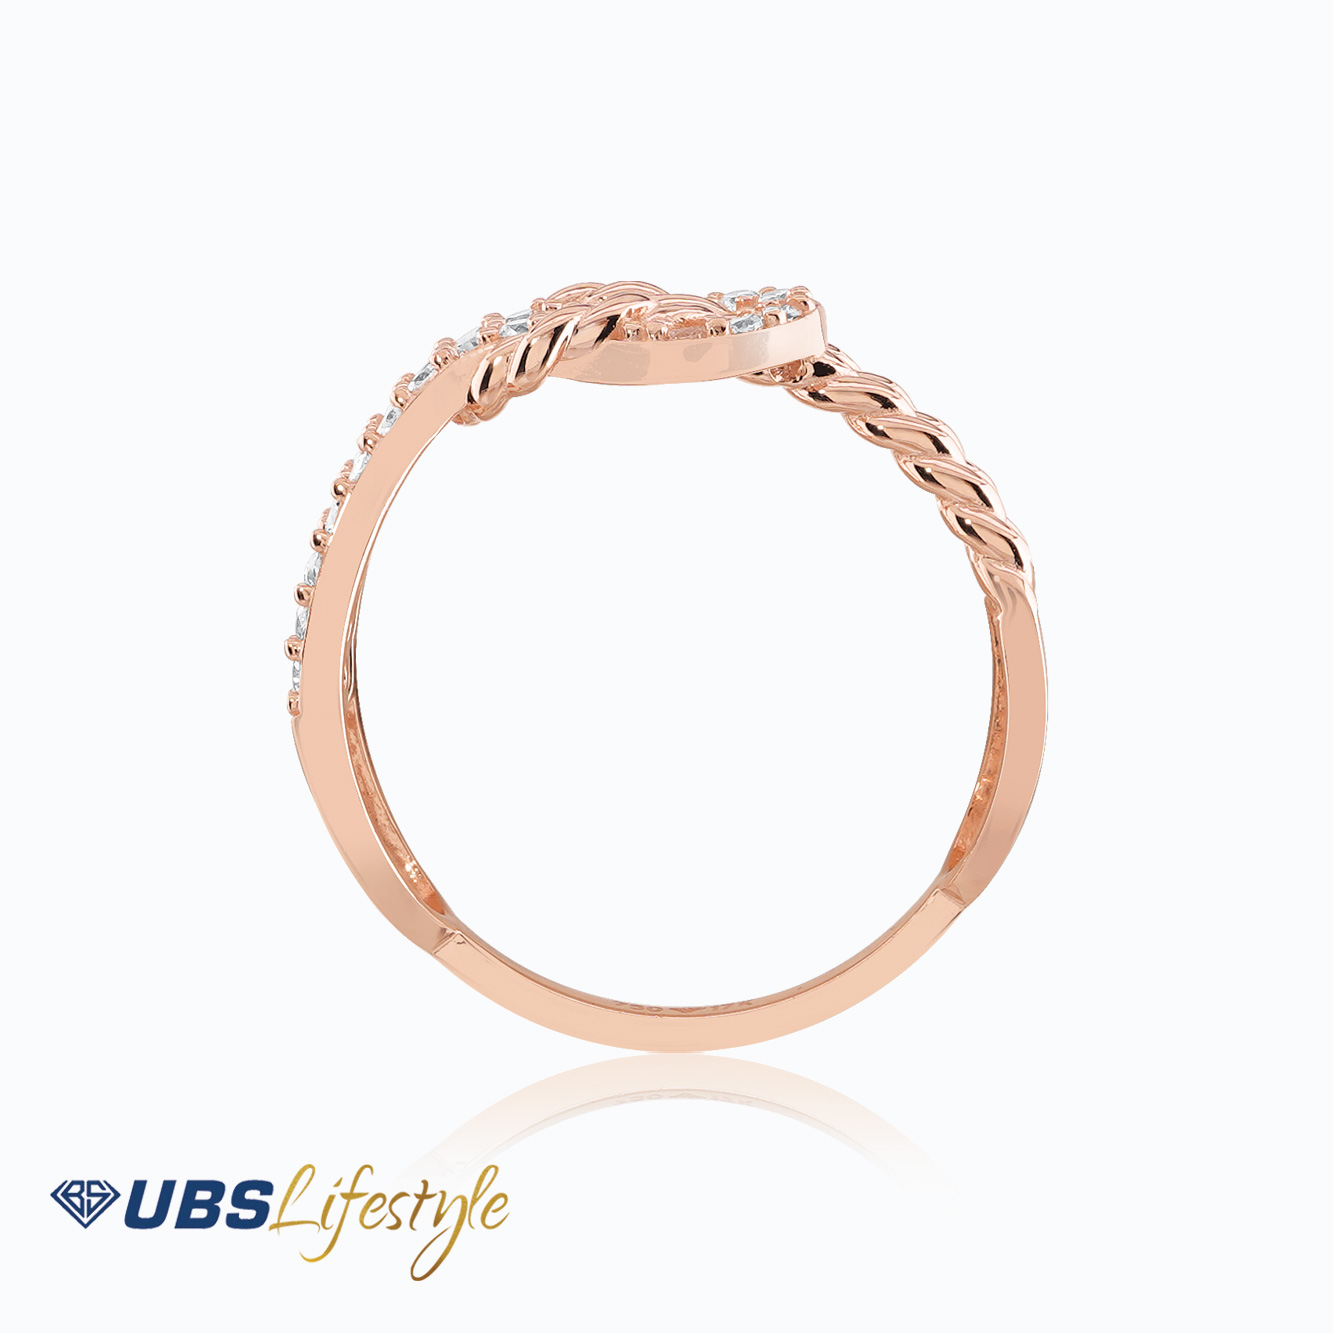 UBS Cincin Emas Knot - Ksc0861R - 17K